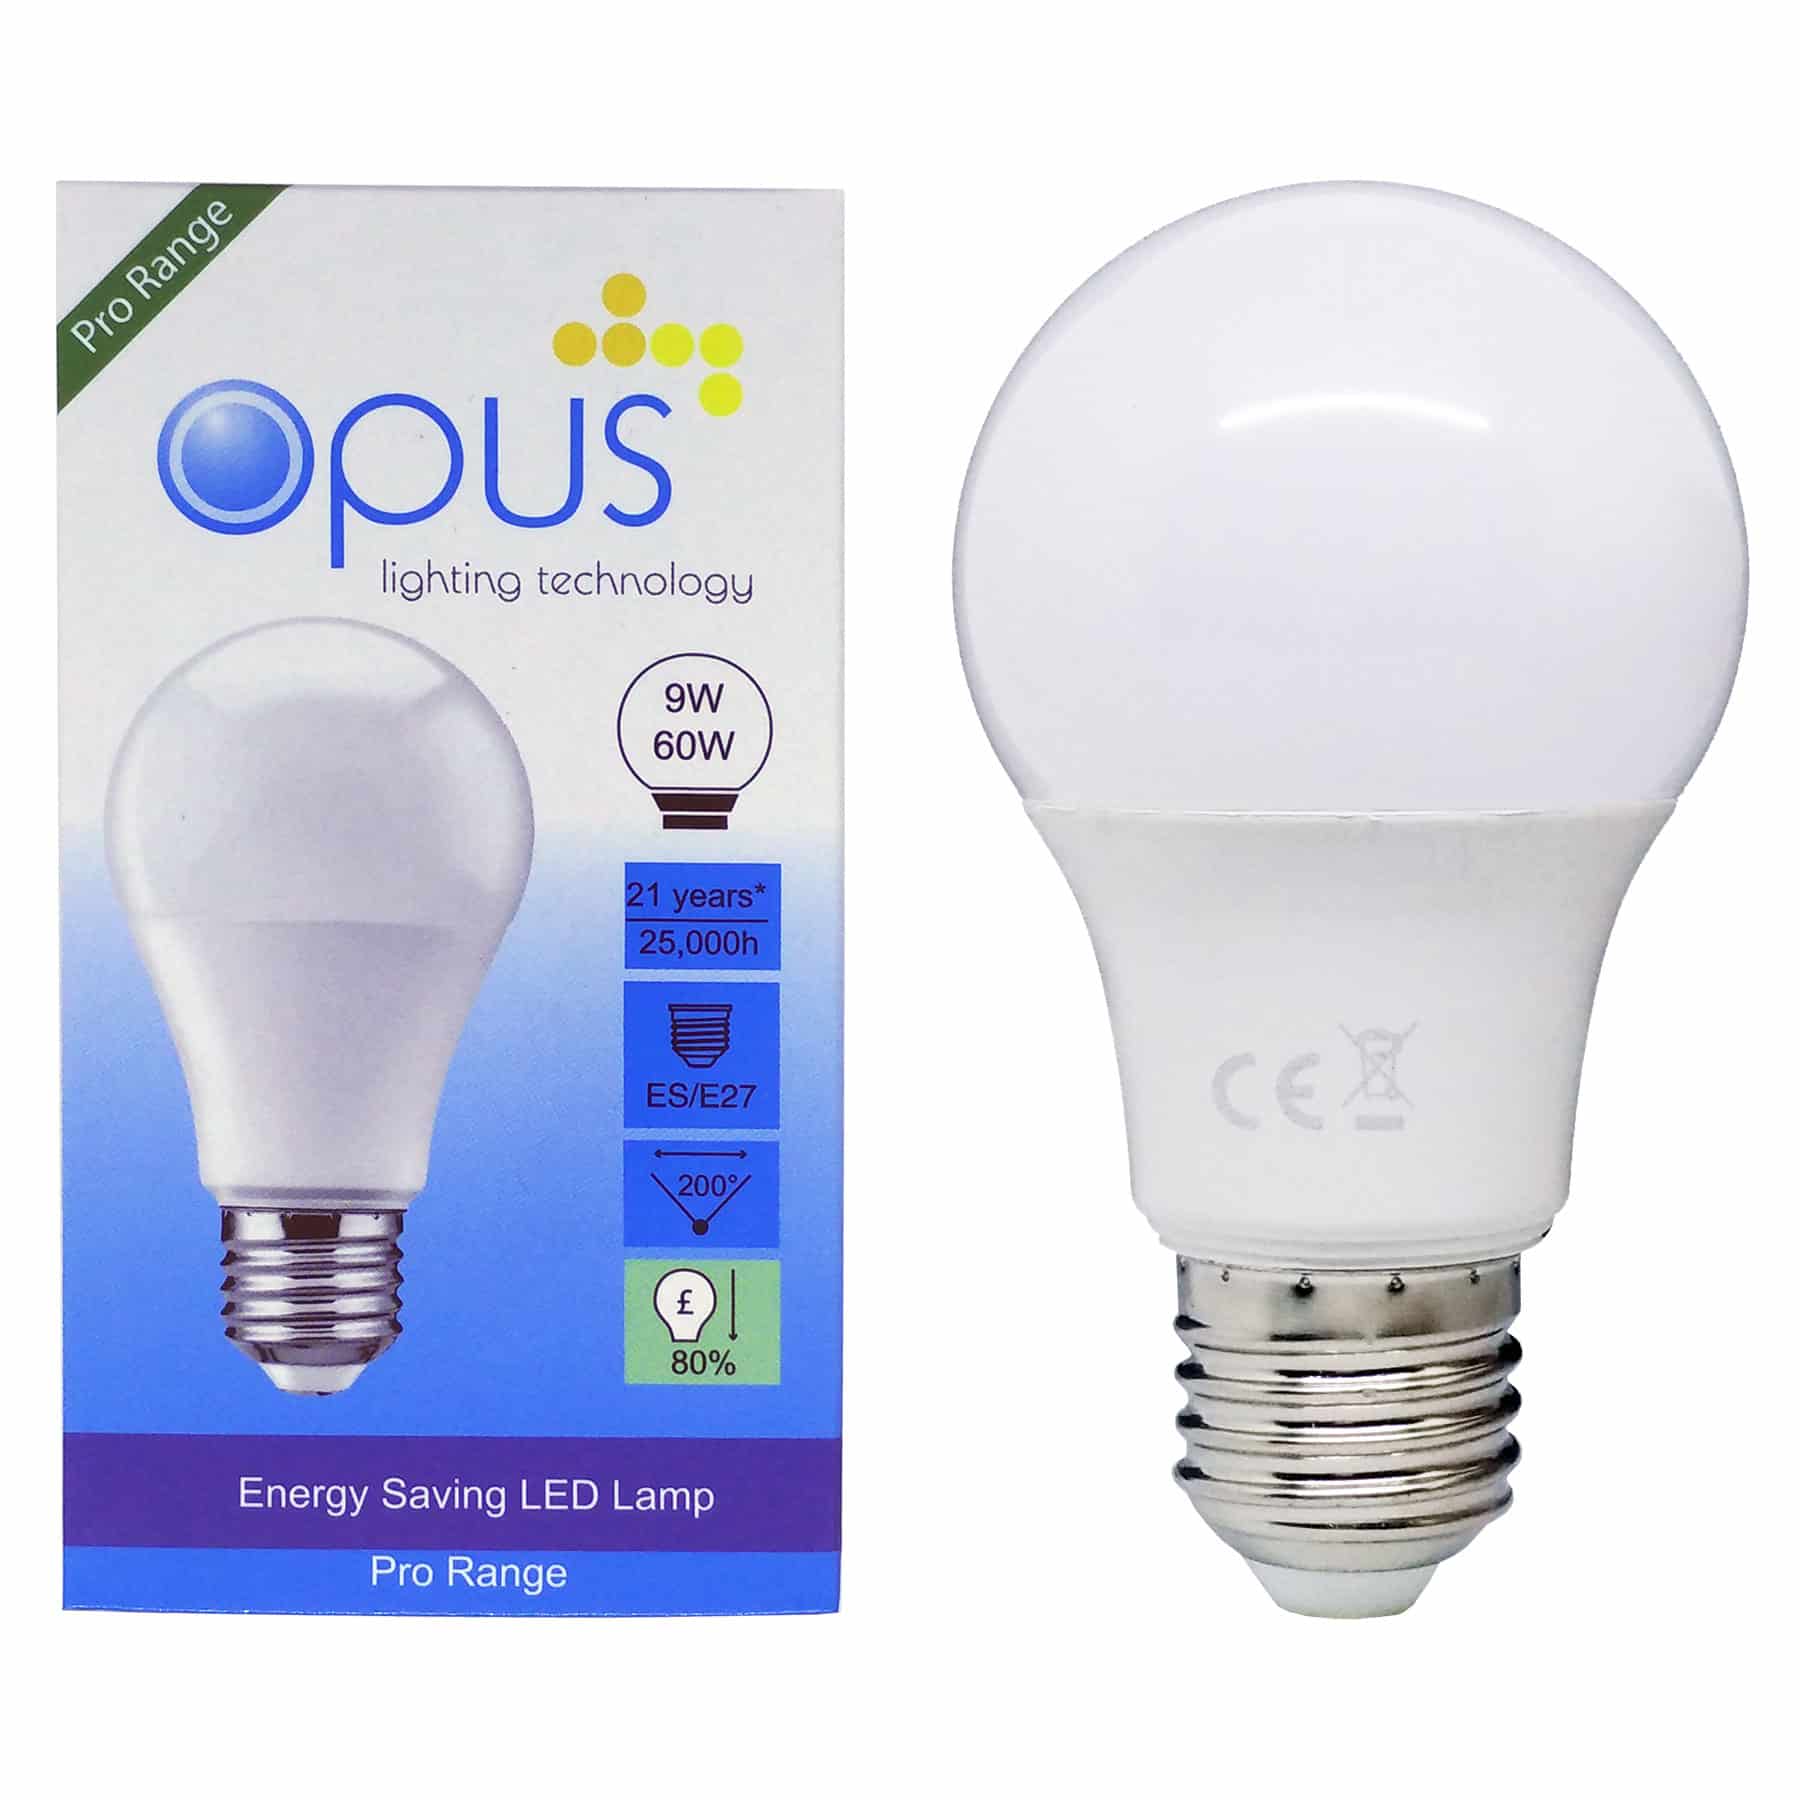 Opus Lighting Technology 9watt Gls Led, Do Motion Lights Need Special Bulbs